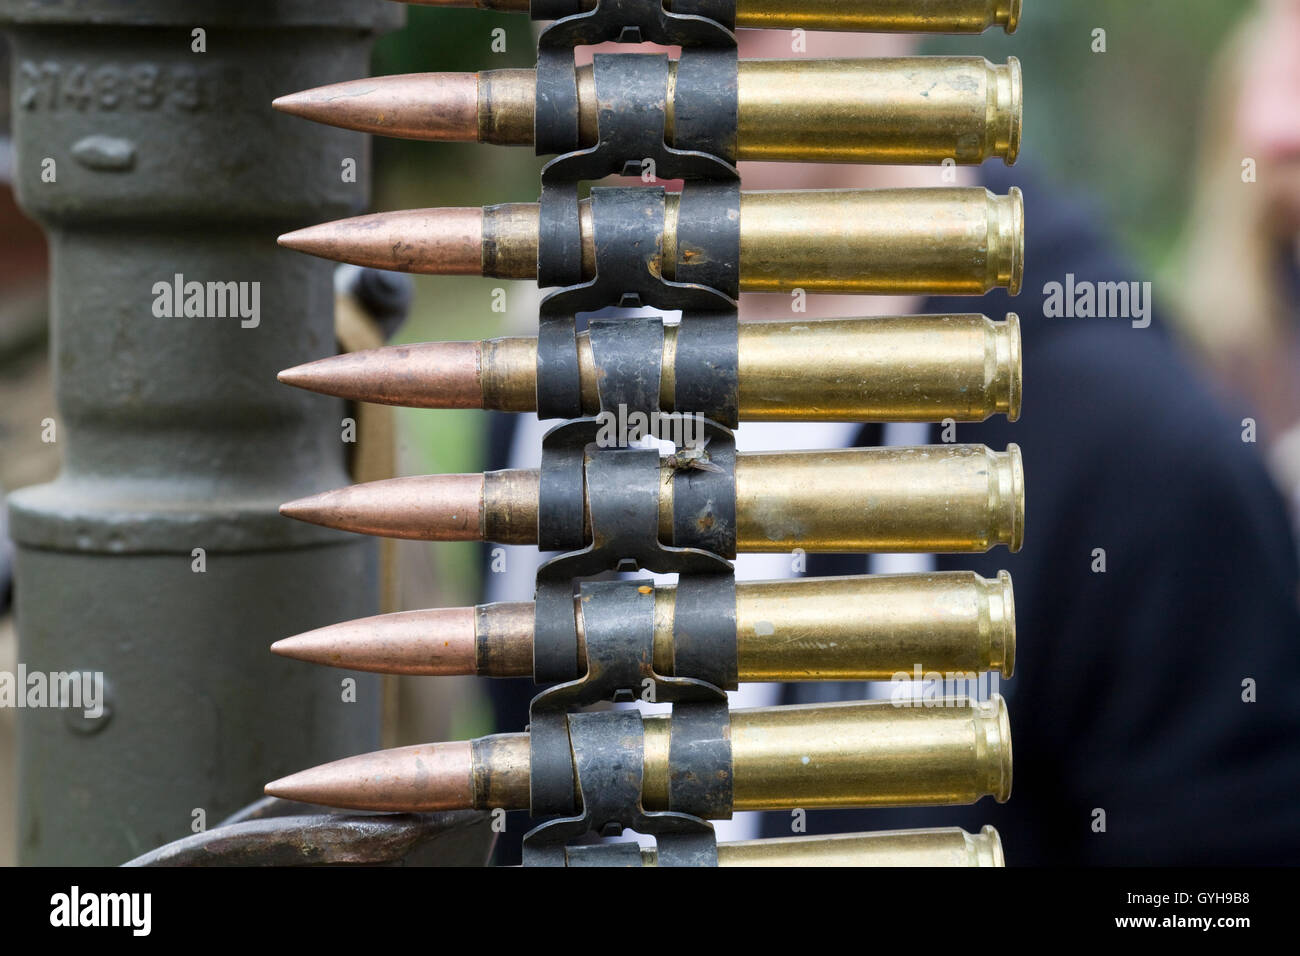 Metal belt with machine gun cartridges Stock Photo